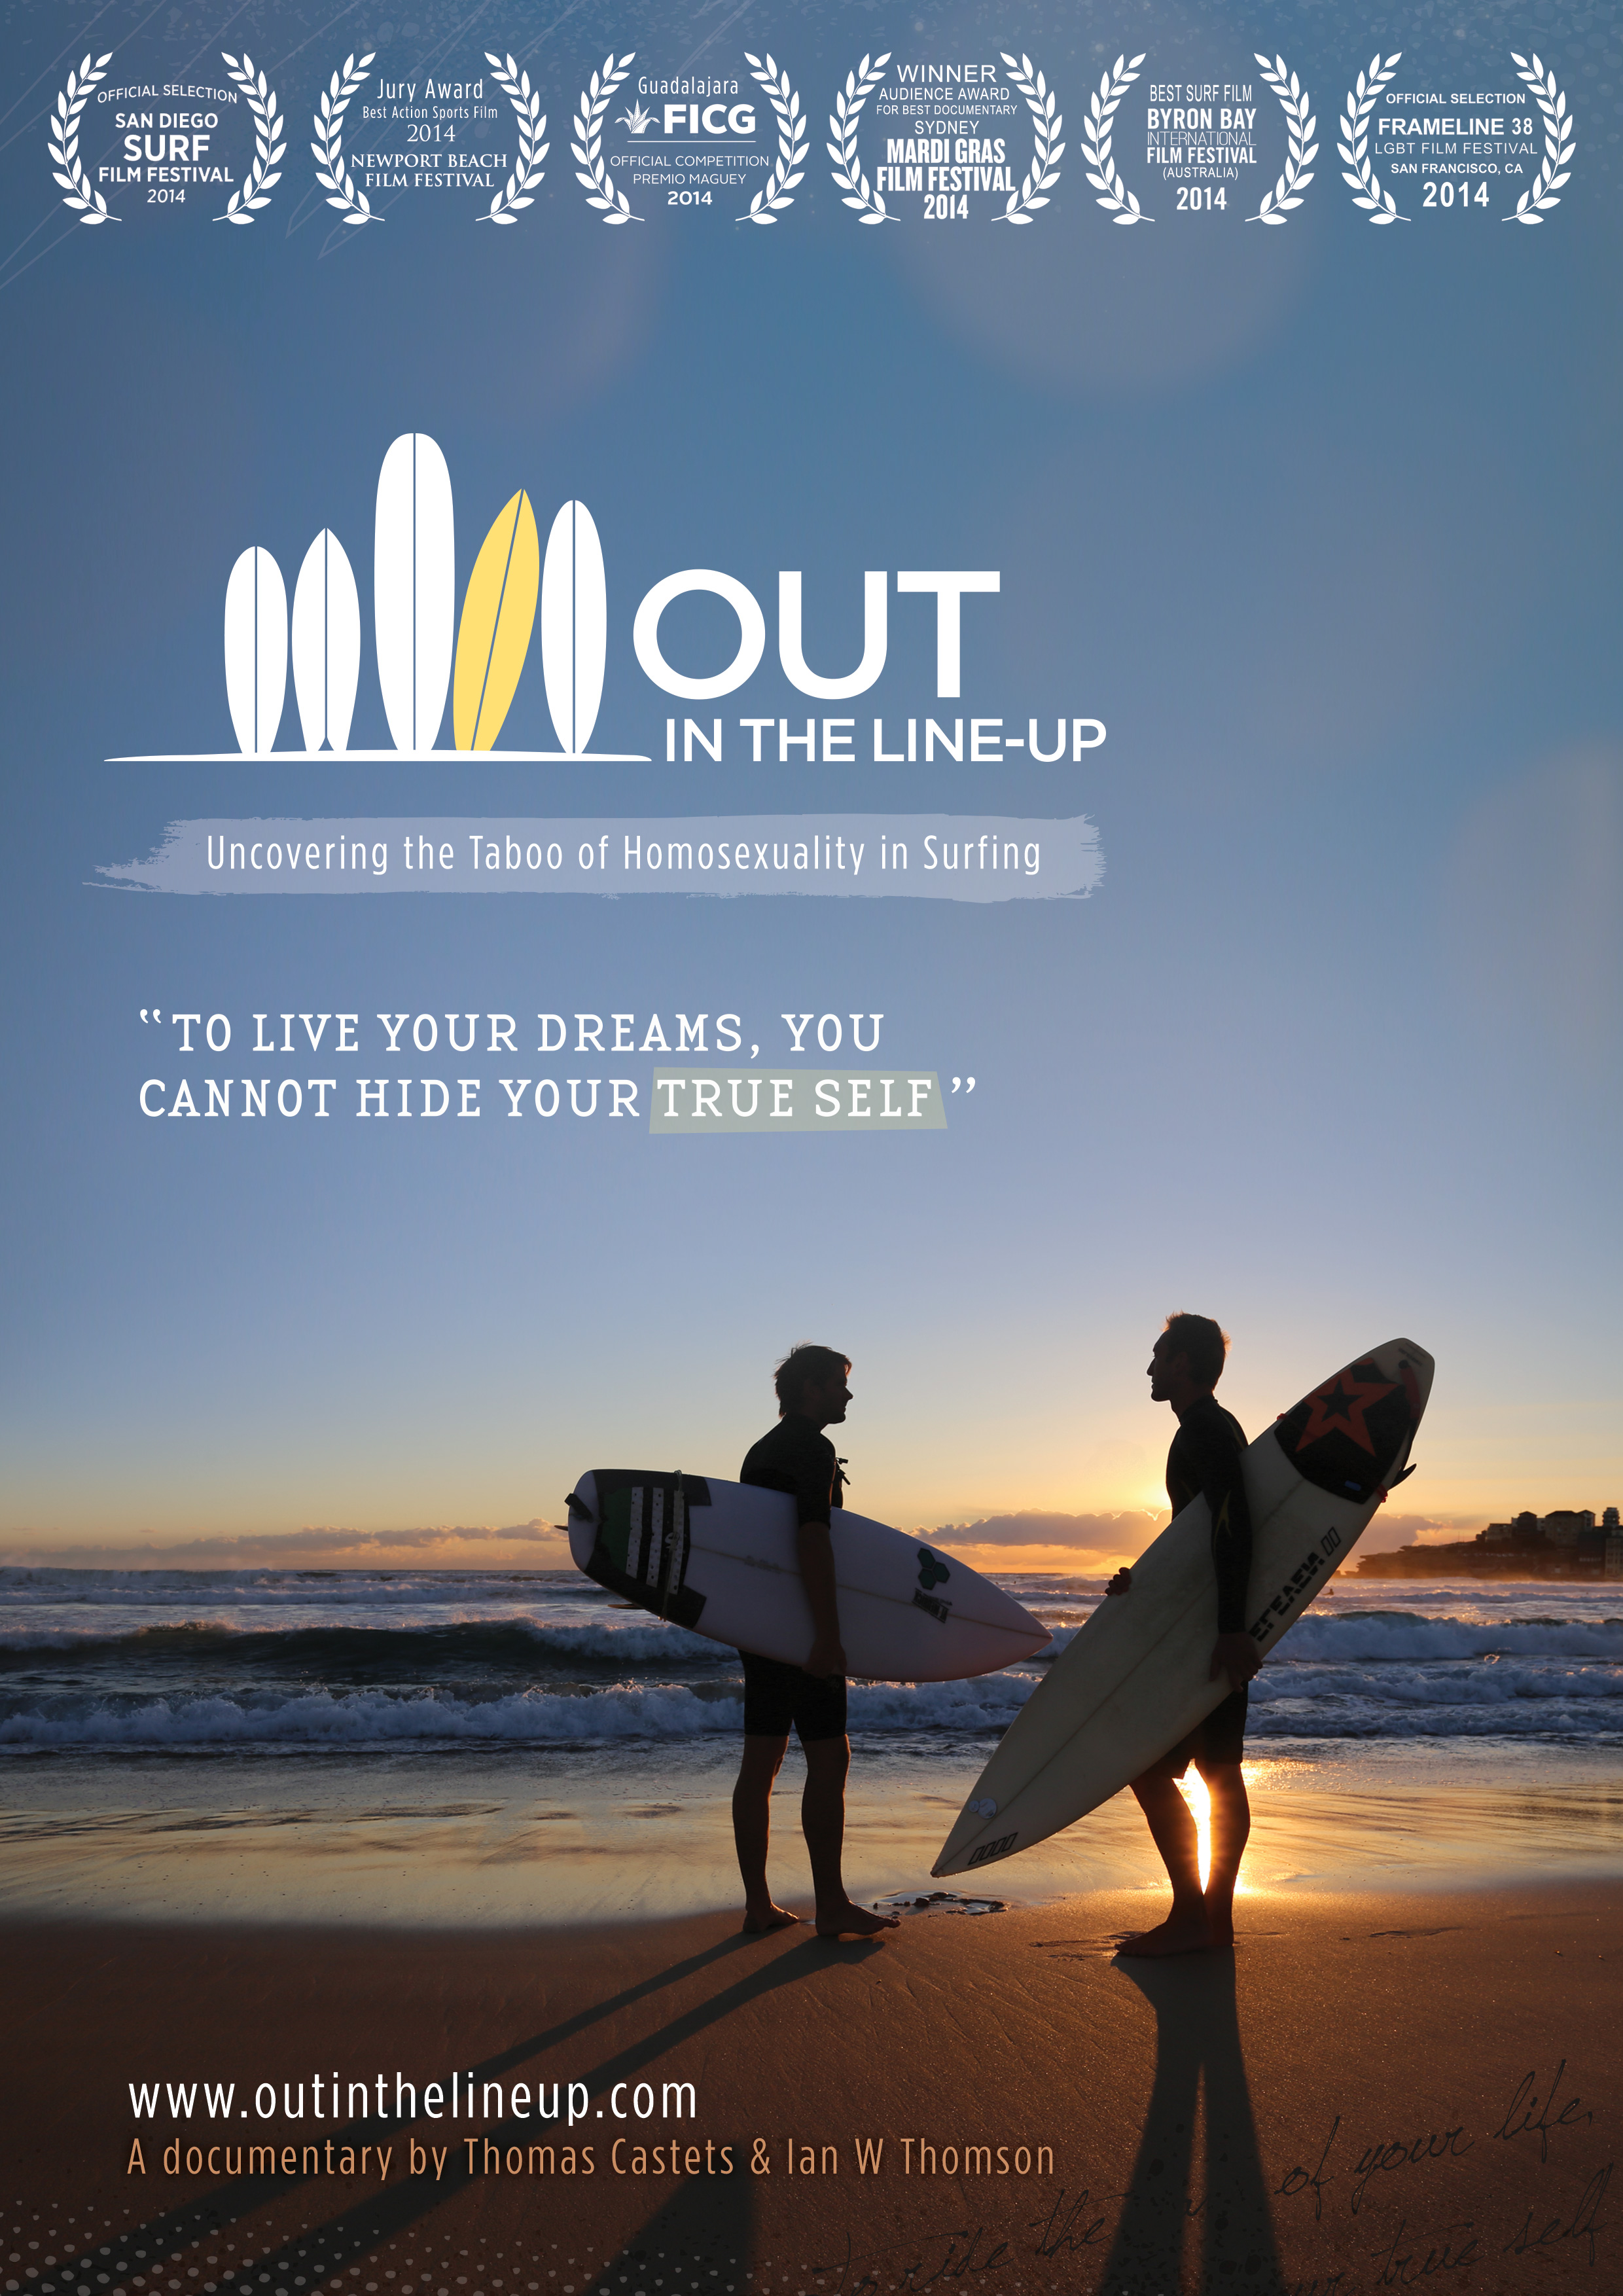 Aussie doco on gay surfers wins Best Action Sports Film Award at Newport Beach Film Festival